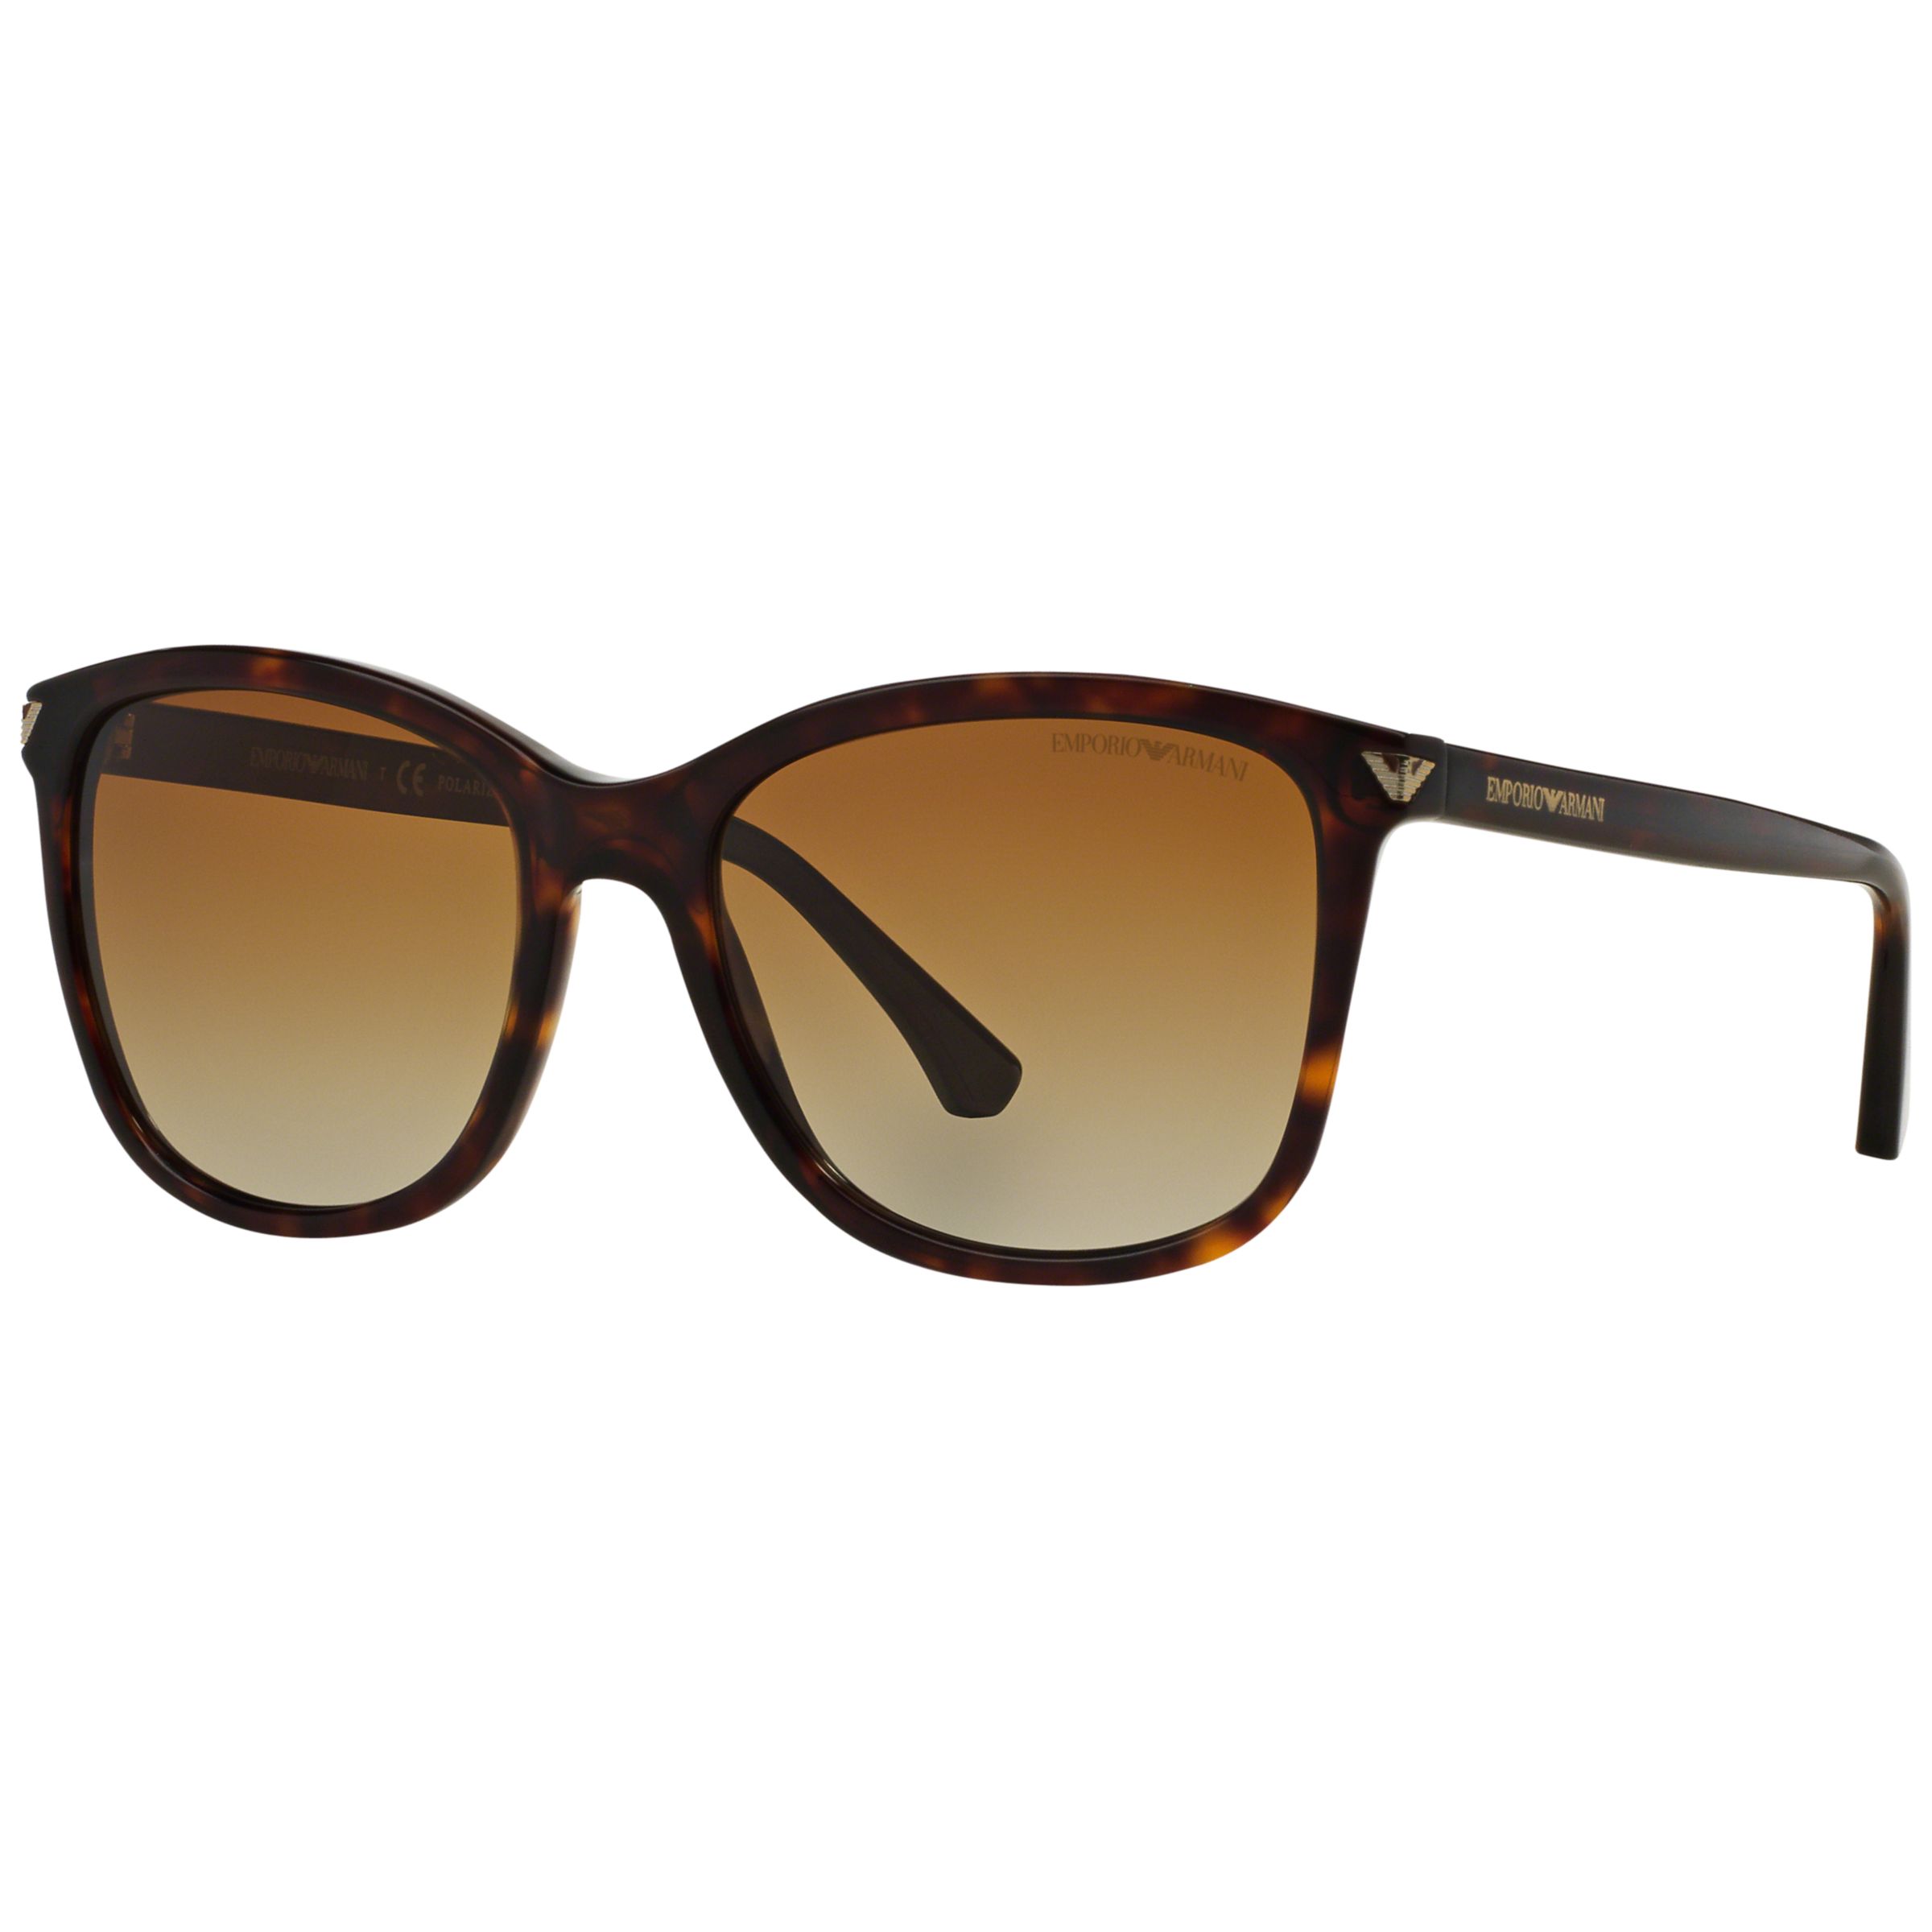 Emporio Armani Women's Sunglasses | John Lewis & Partners